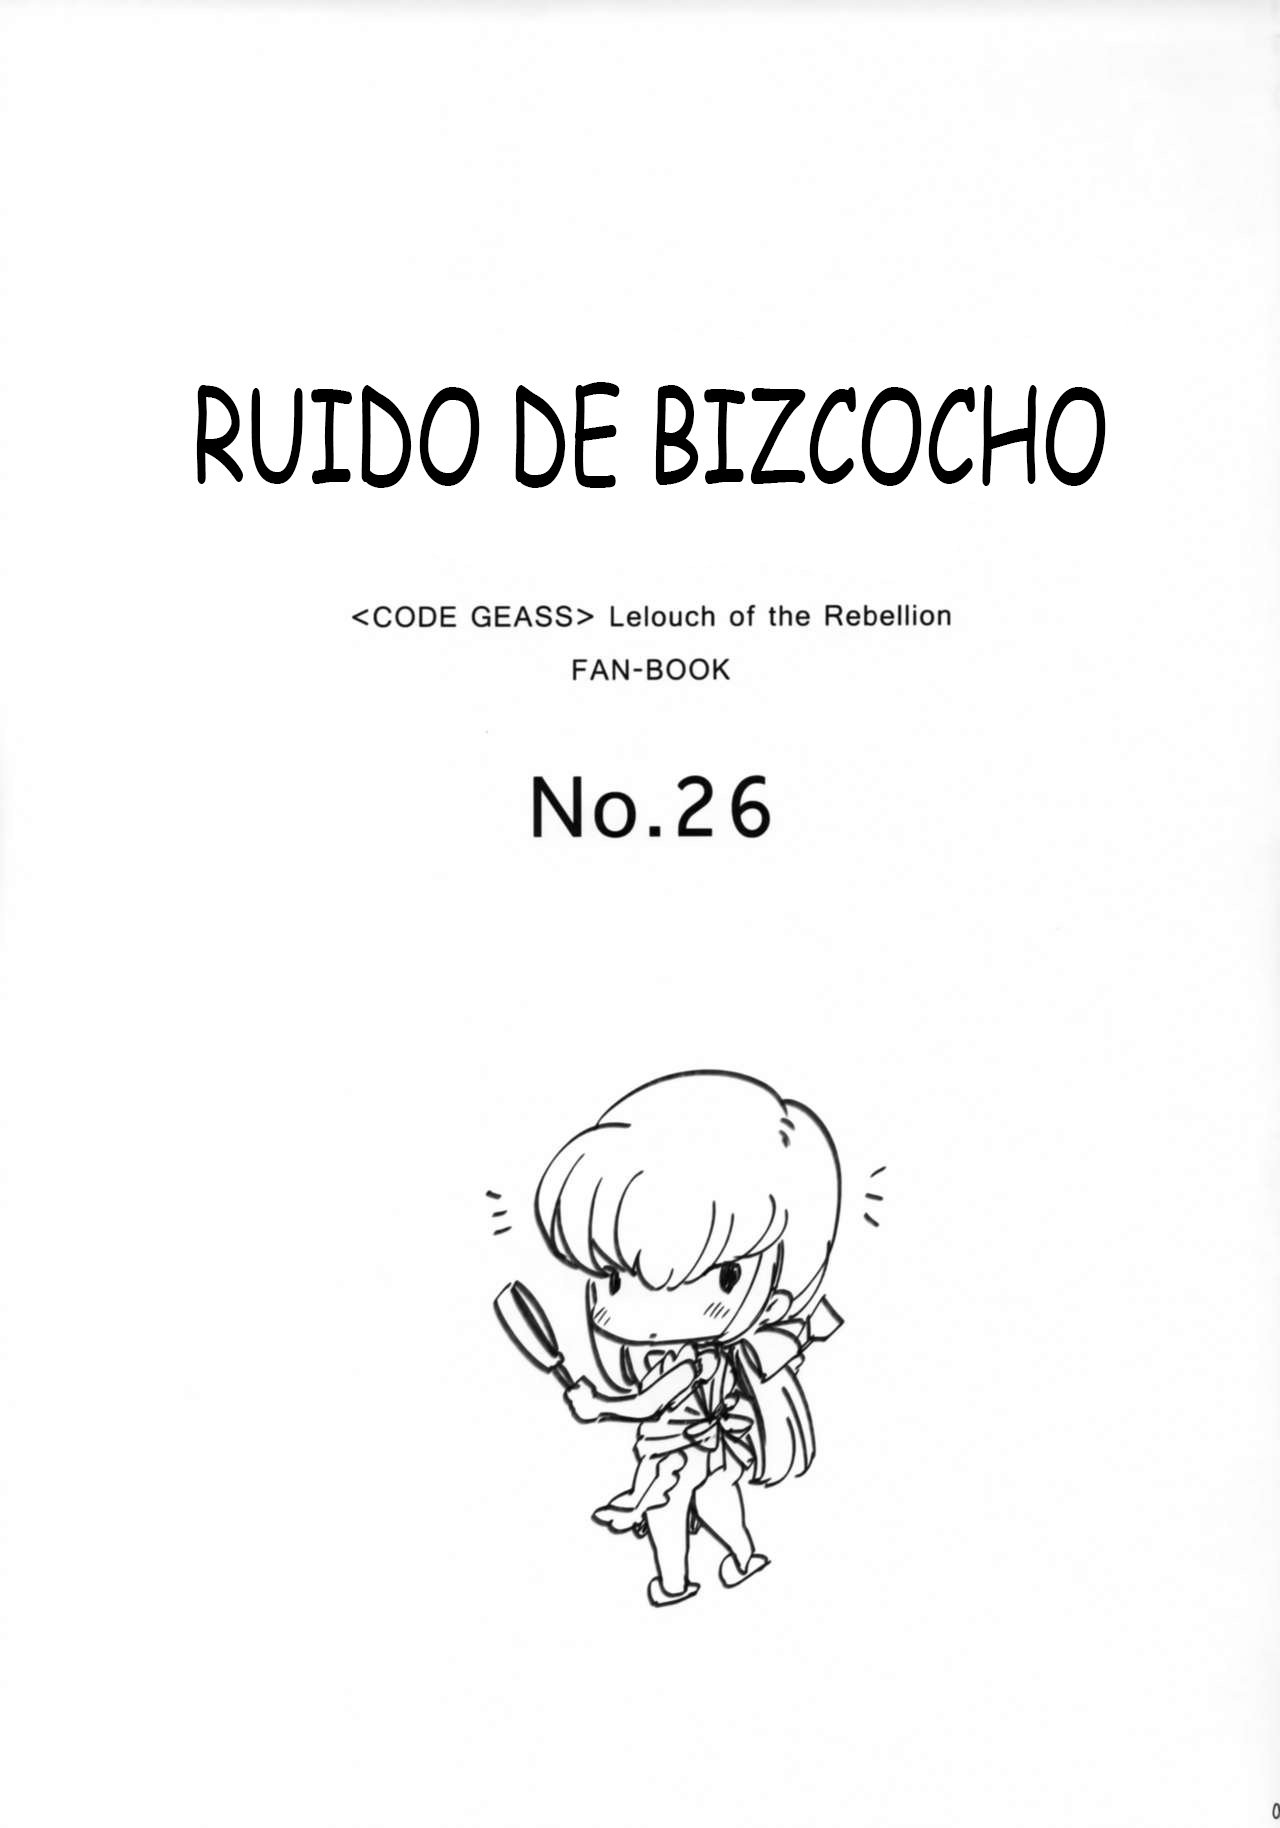 RUIDO DE BIZCOCHO (BISQUE NOISE) - 2